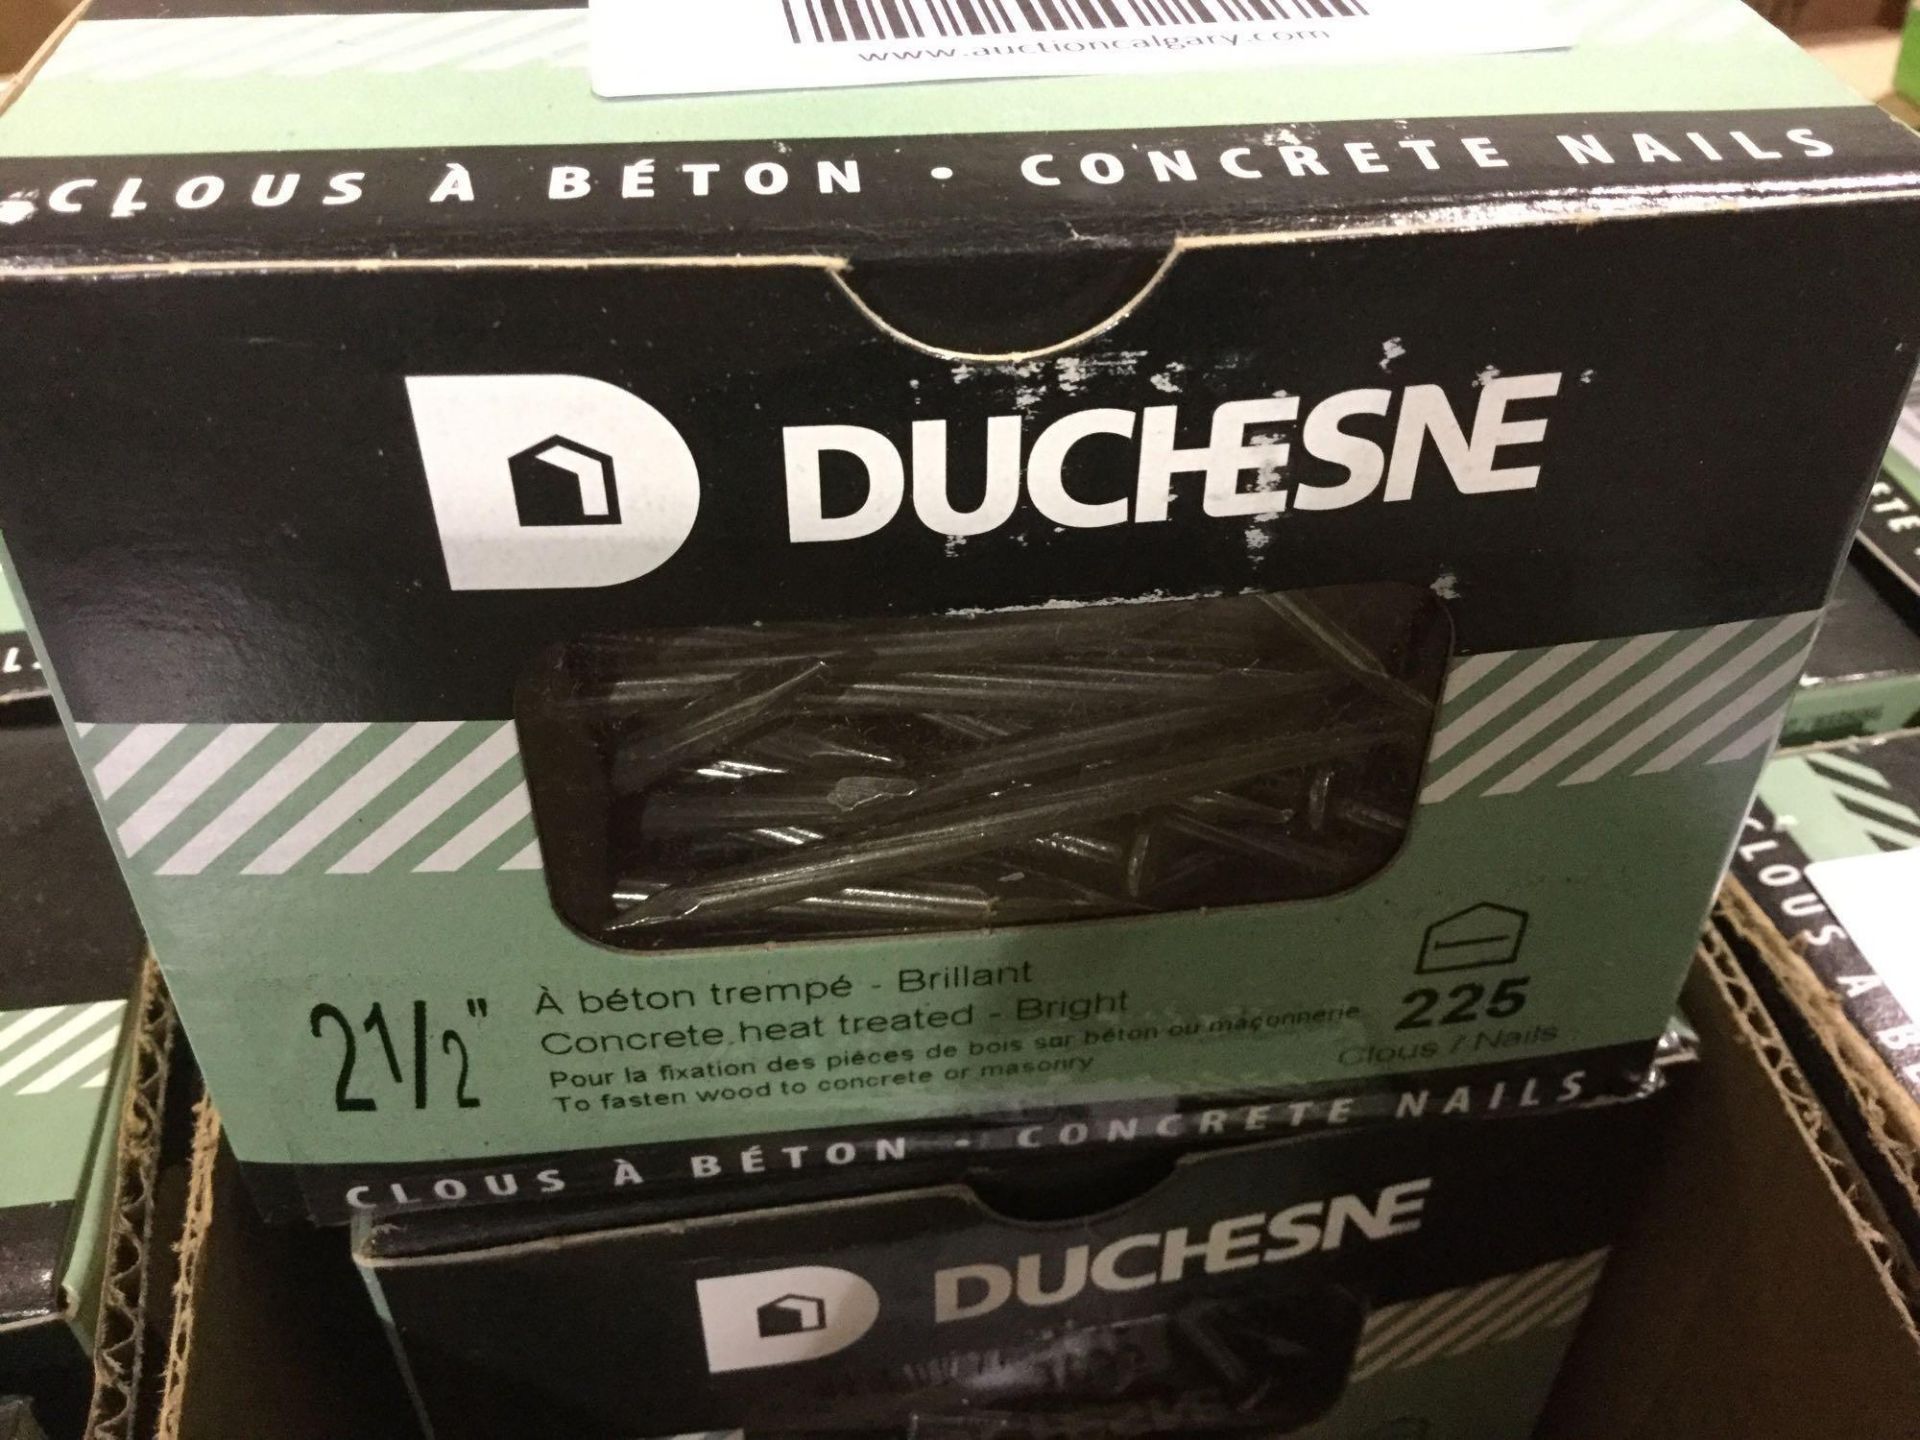 Duchesne 2 1/2" Concrete Heat Treated Nails 225 Count